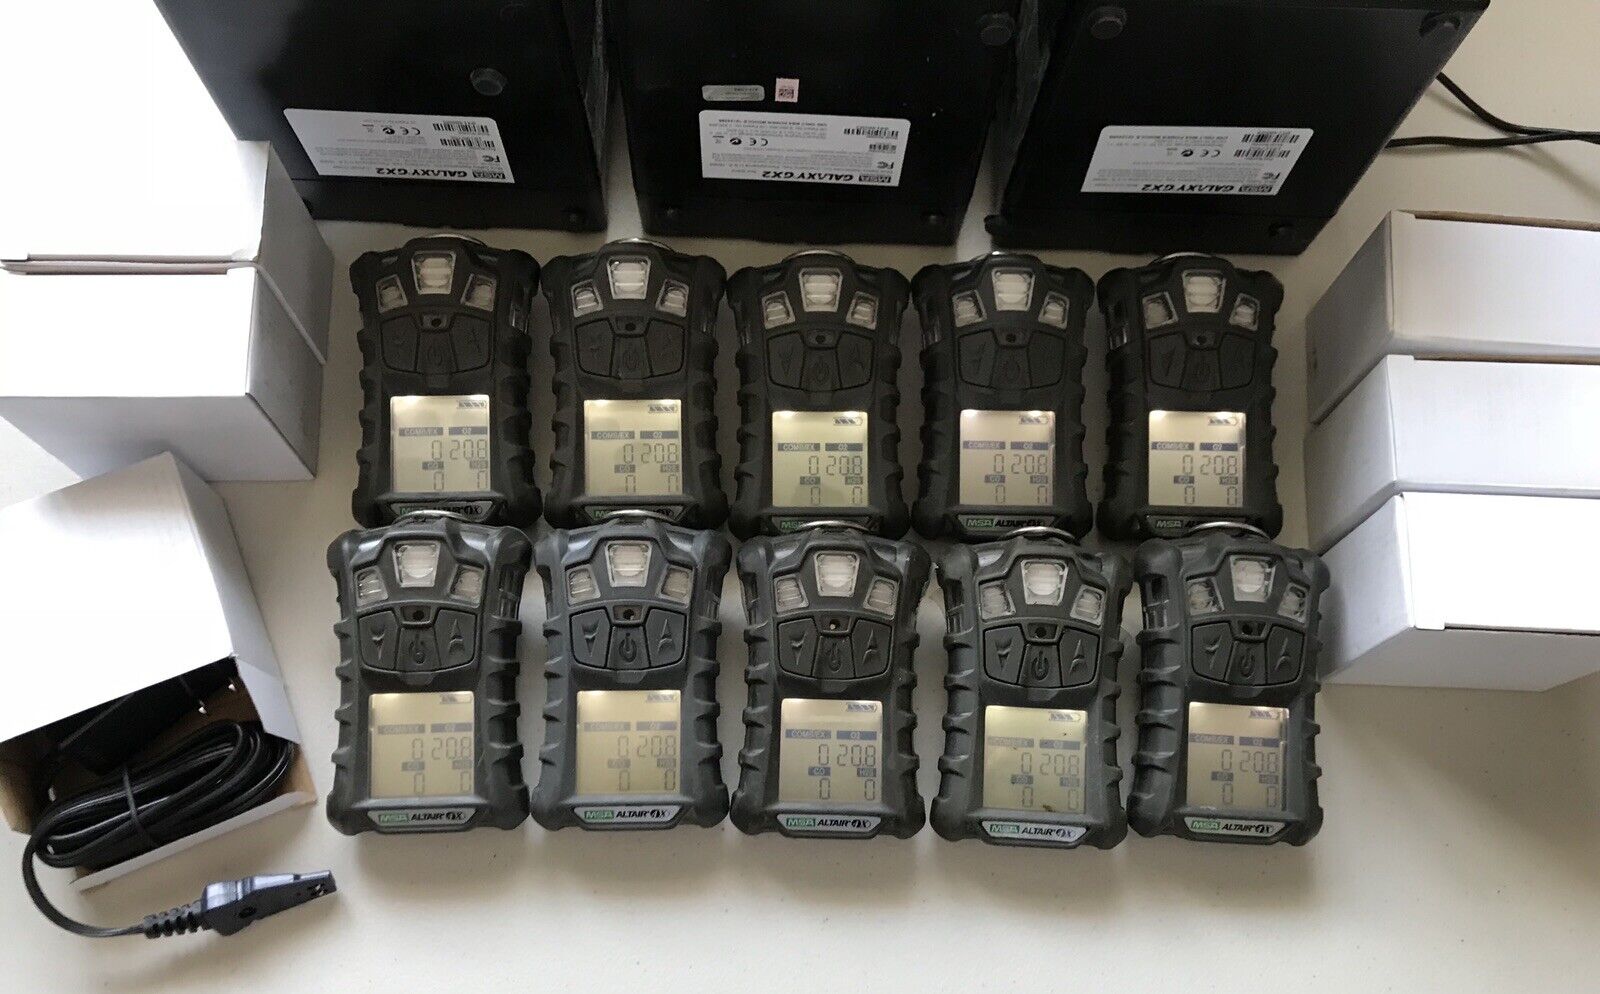 MSA Altair 4X Multi-Gas detectors Monitors (10 Units) With Complete GX2 Dock